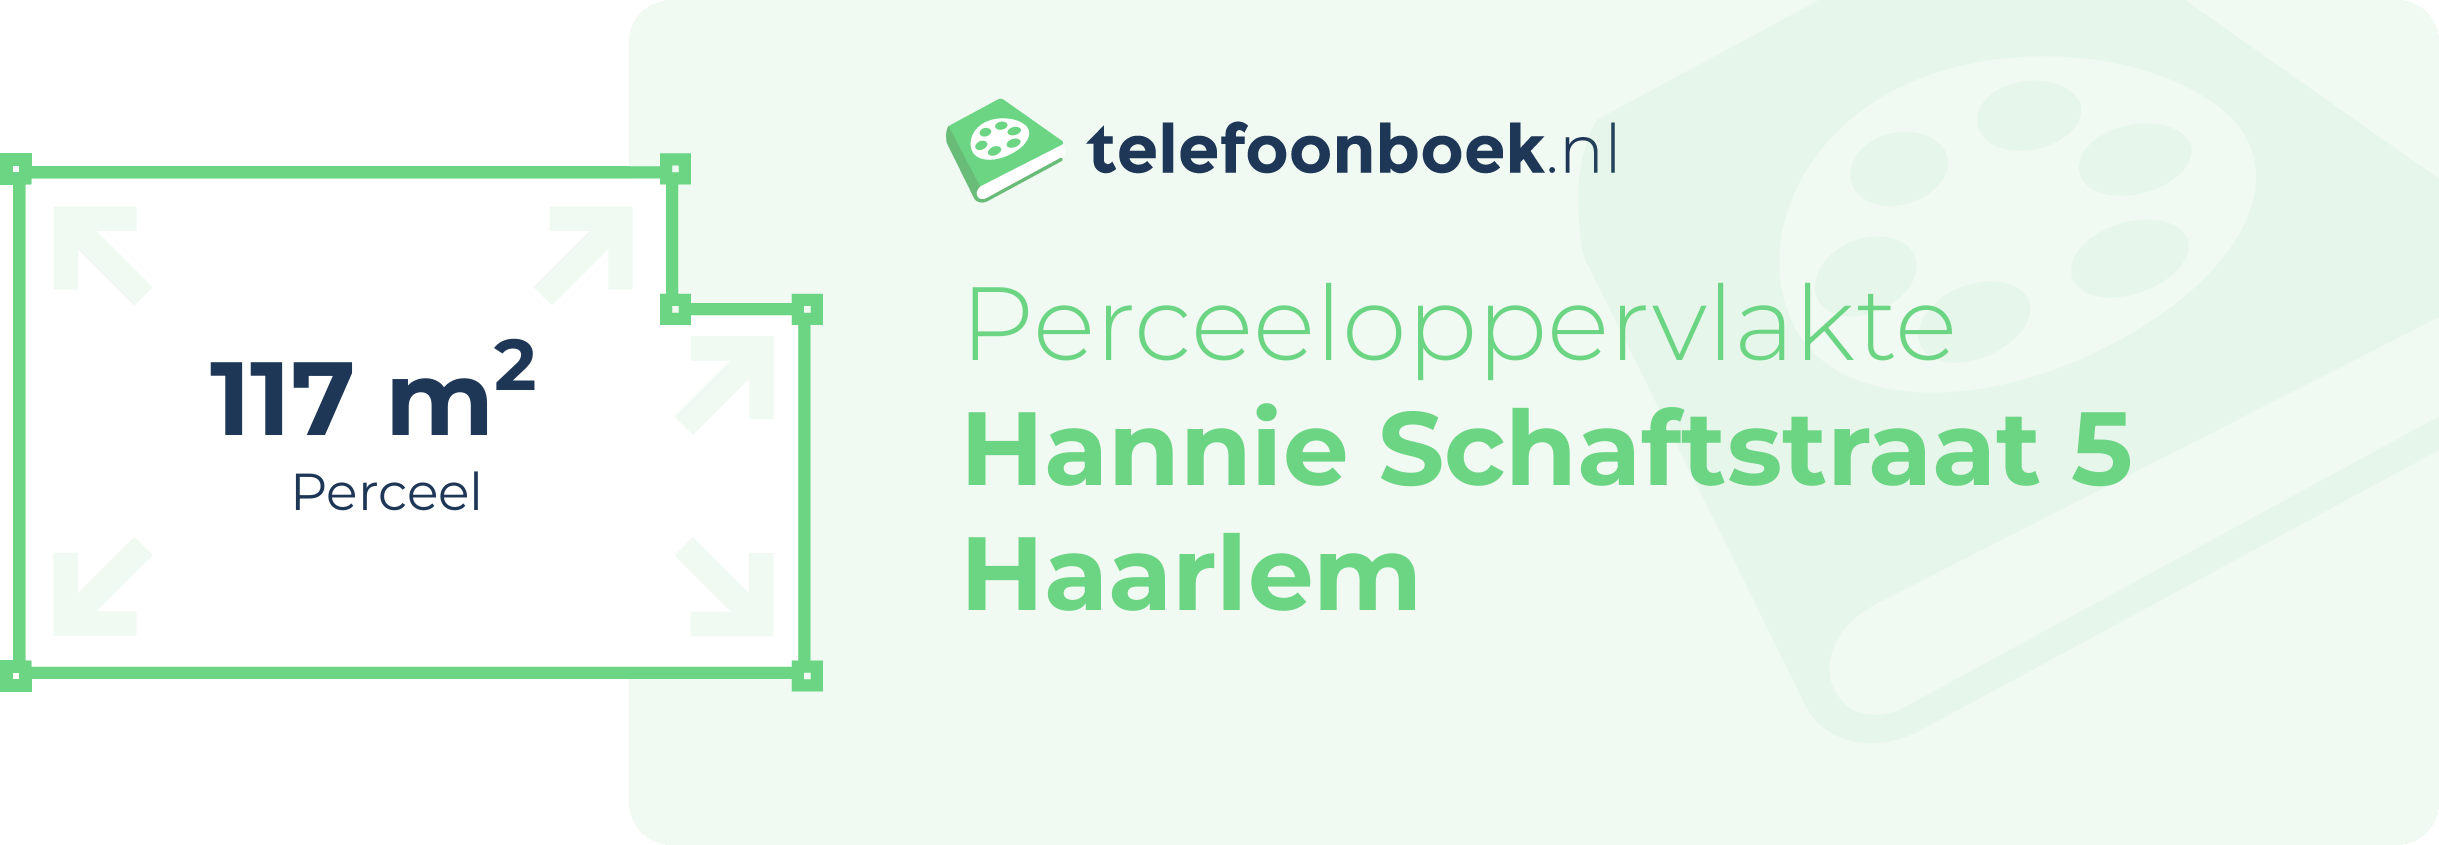 Perceeloppervlakte Hannie Schaftstraat 5 Haarlem